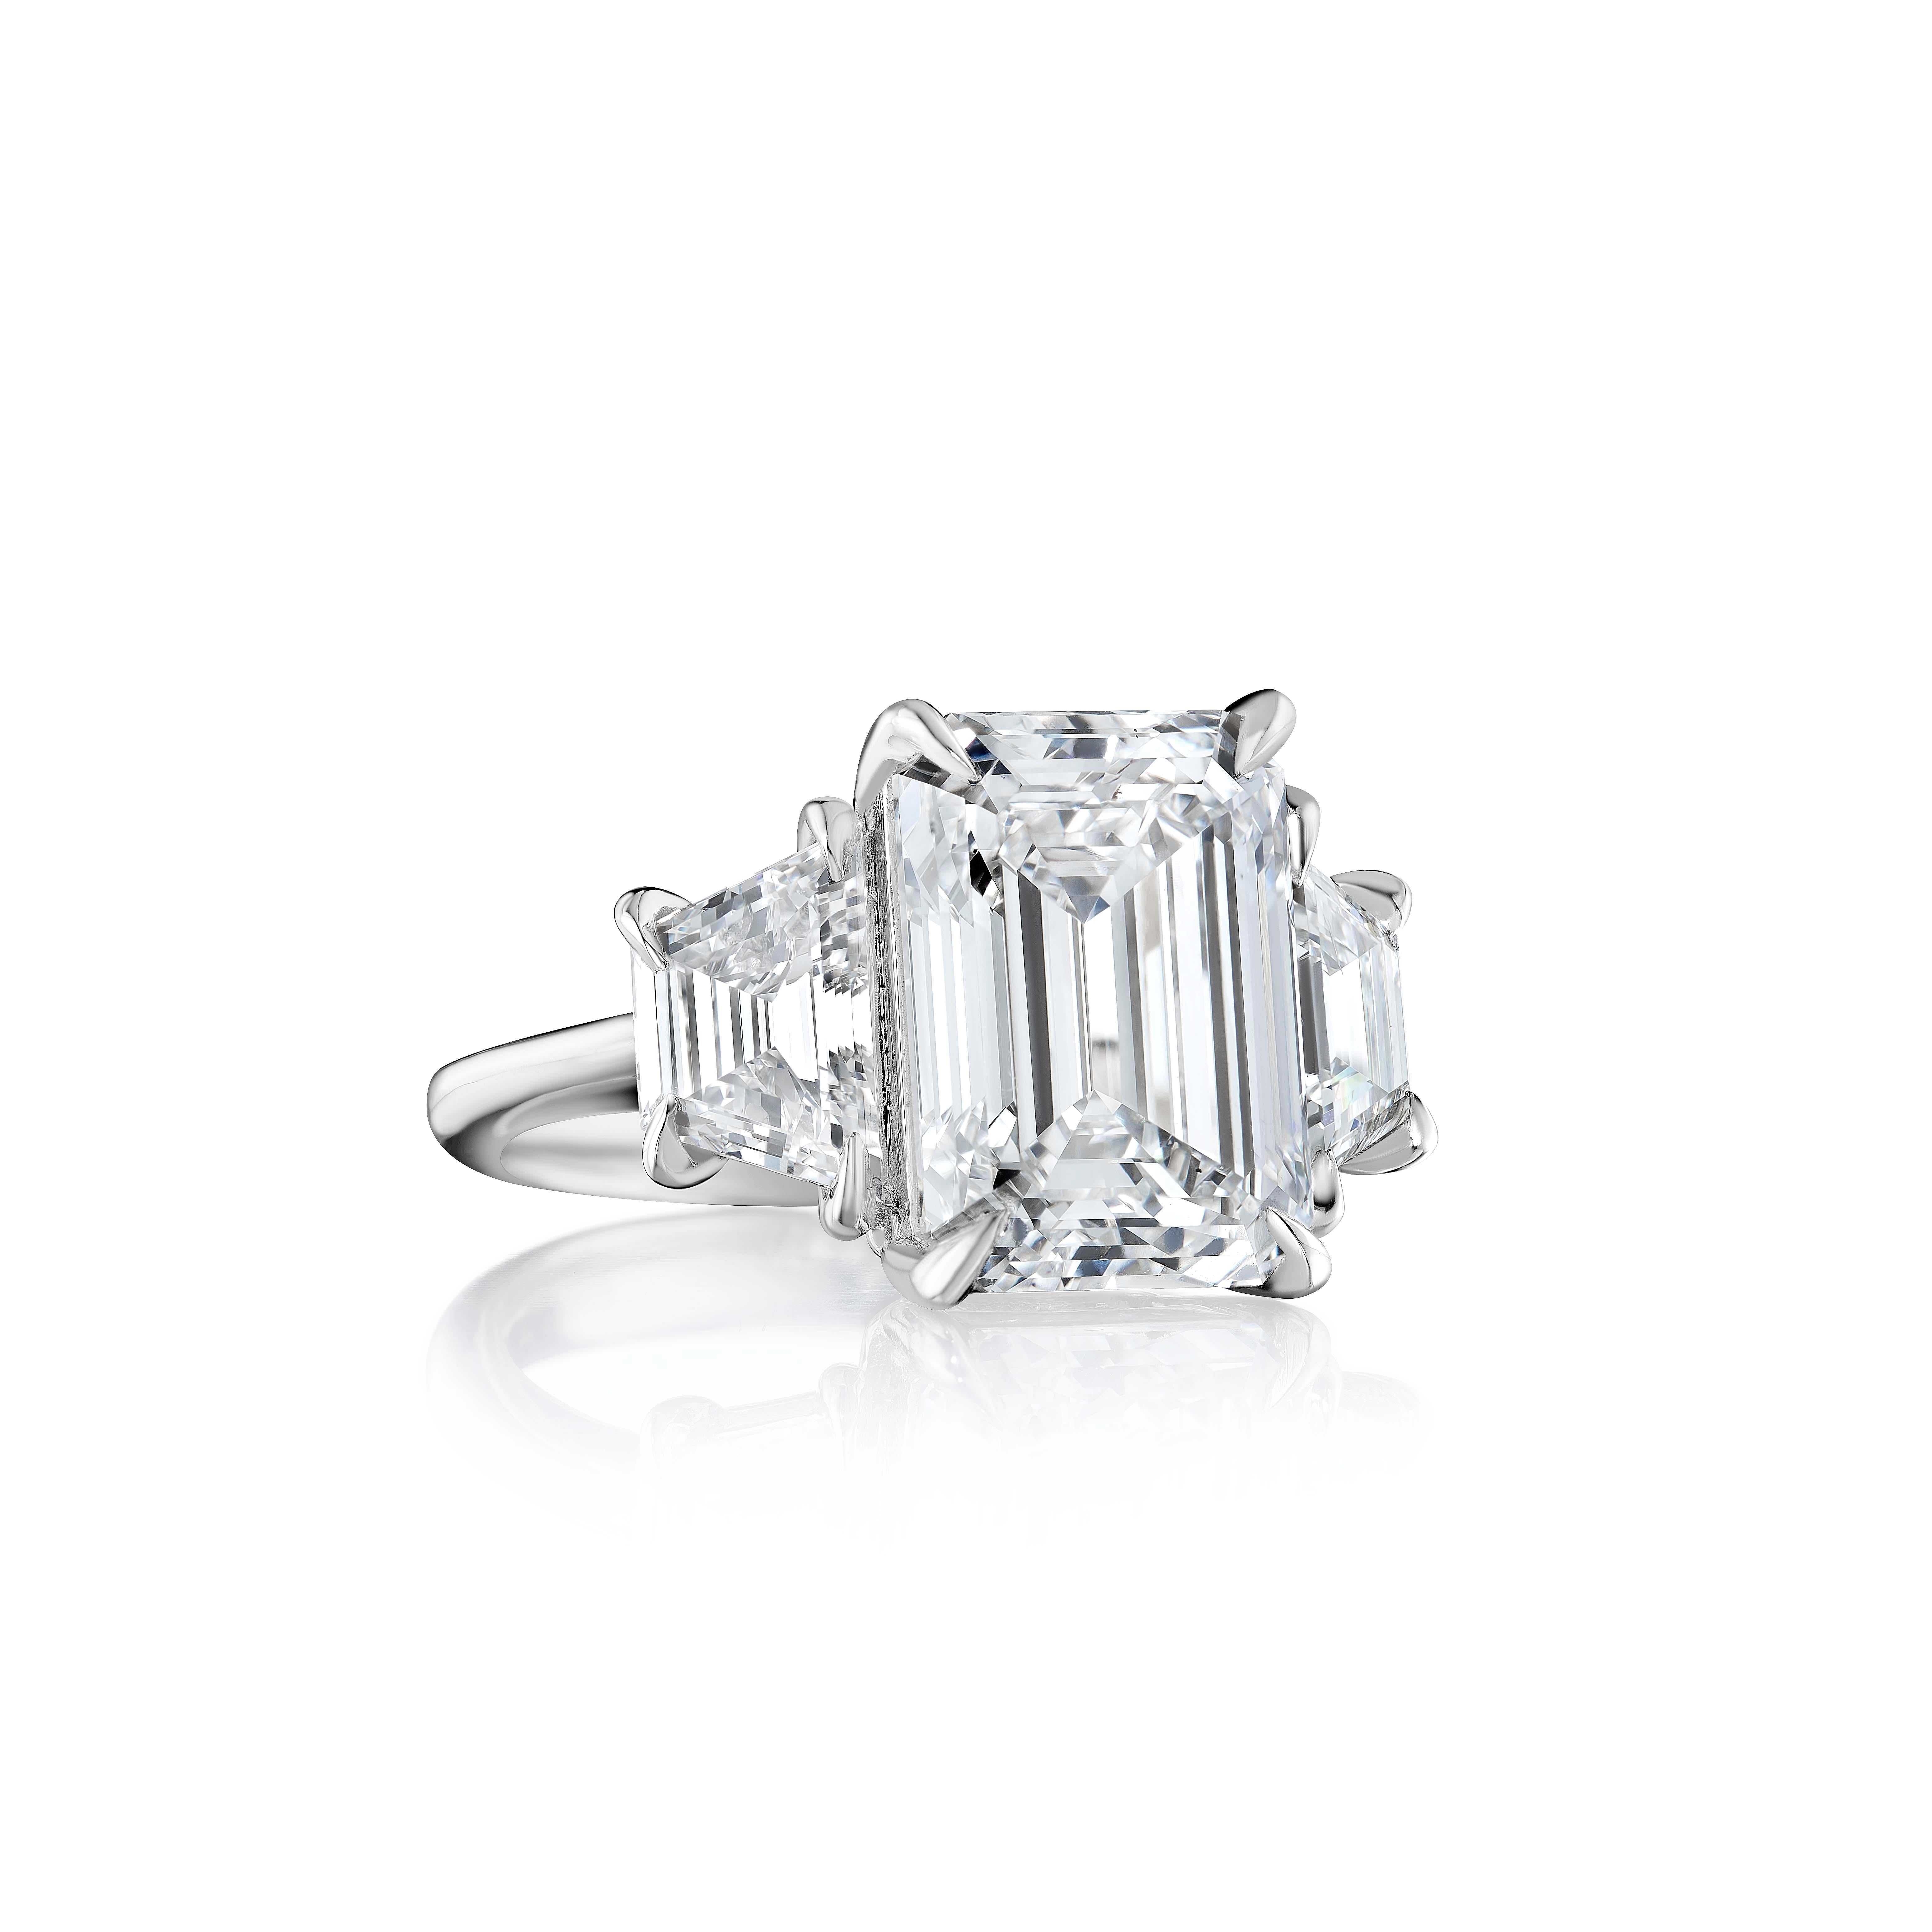 15 carat diamond ring for sale